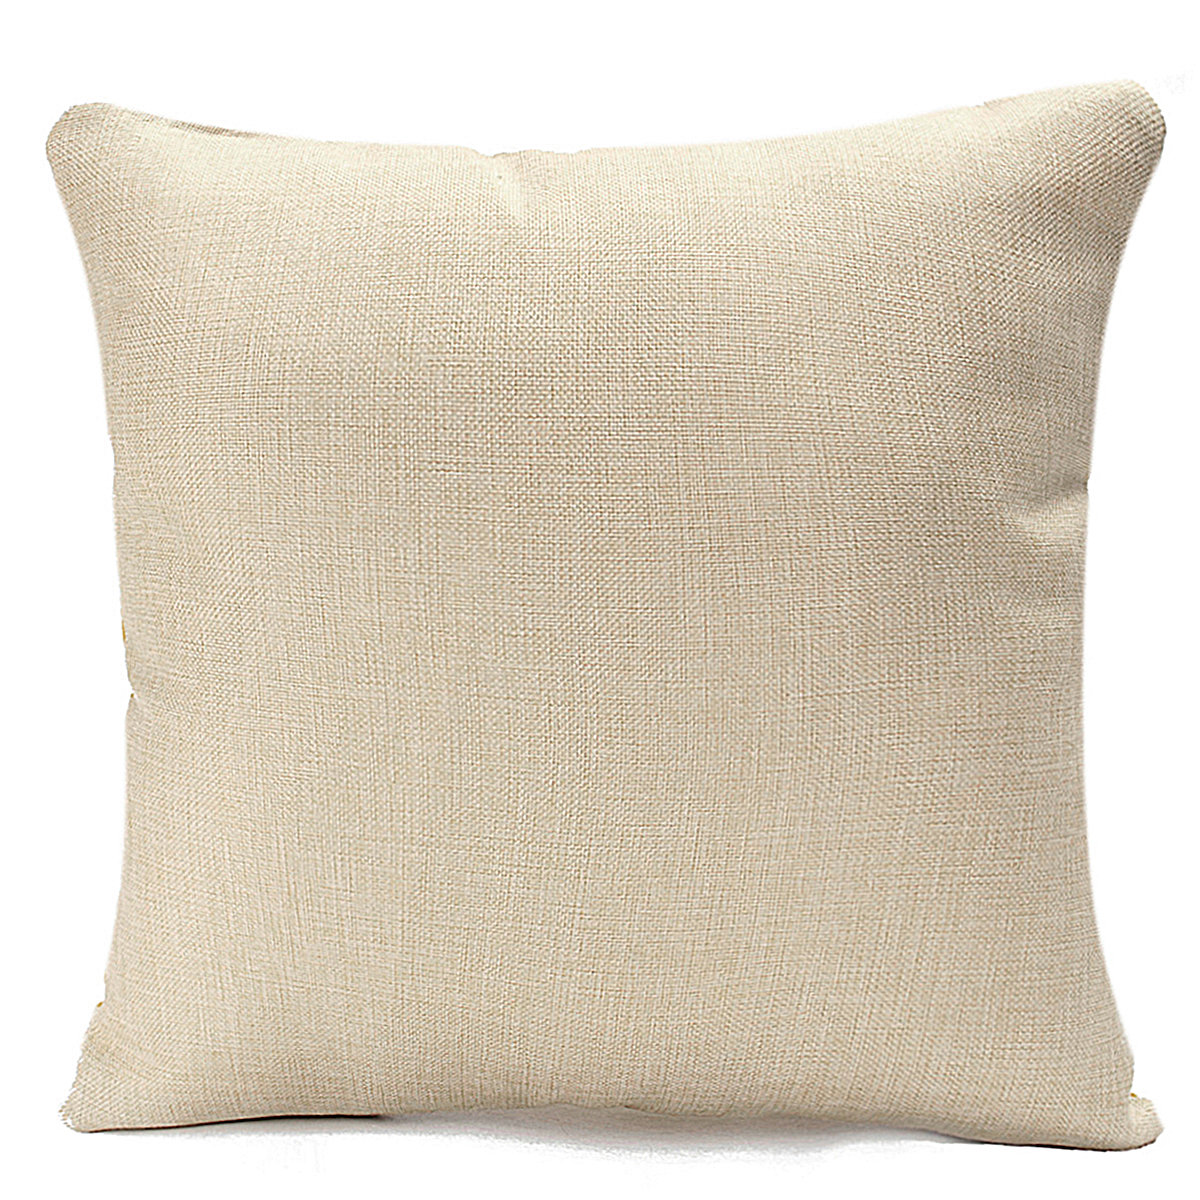 Elephant-Shark-Whale-Dinosaur-Cushion-Cover-Cotton-Linen-Pillow-Case-Throw-Wedding-Decor-Pillowcase-1367063-10